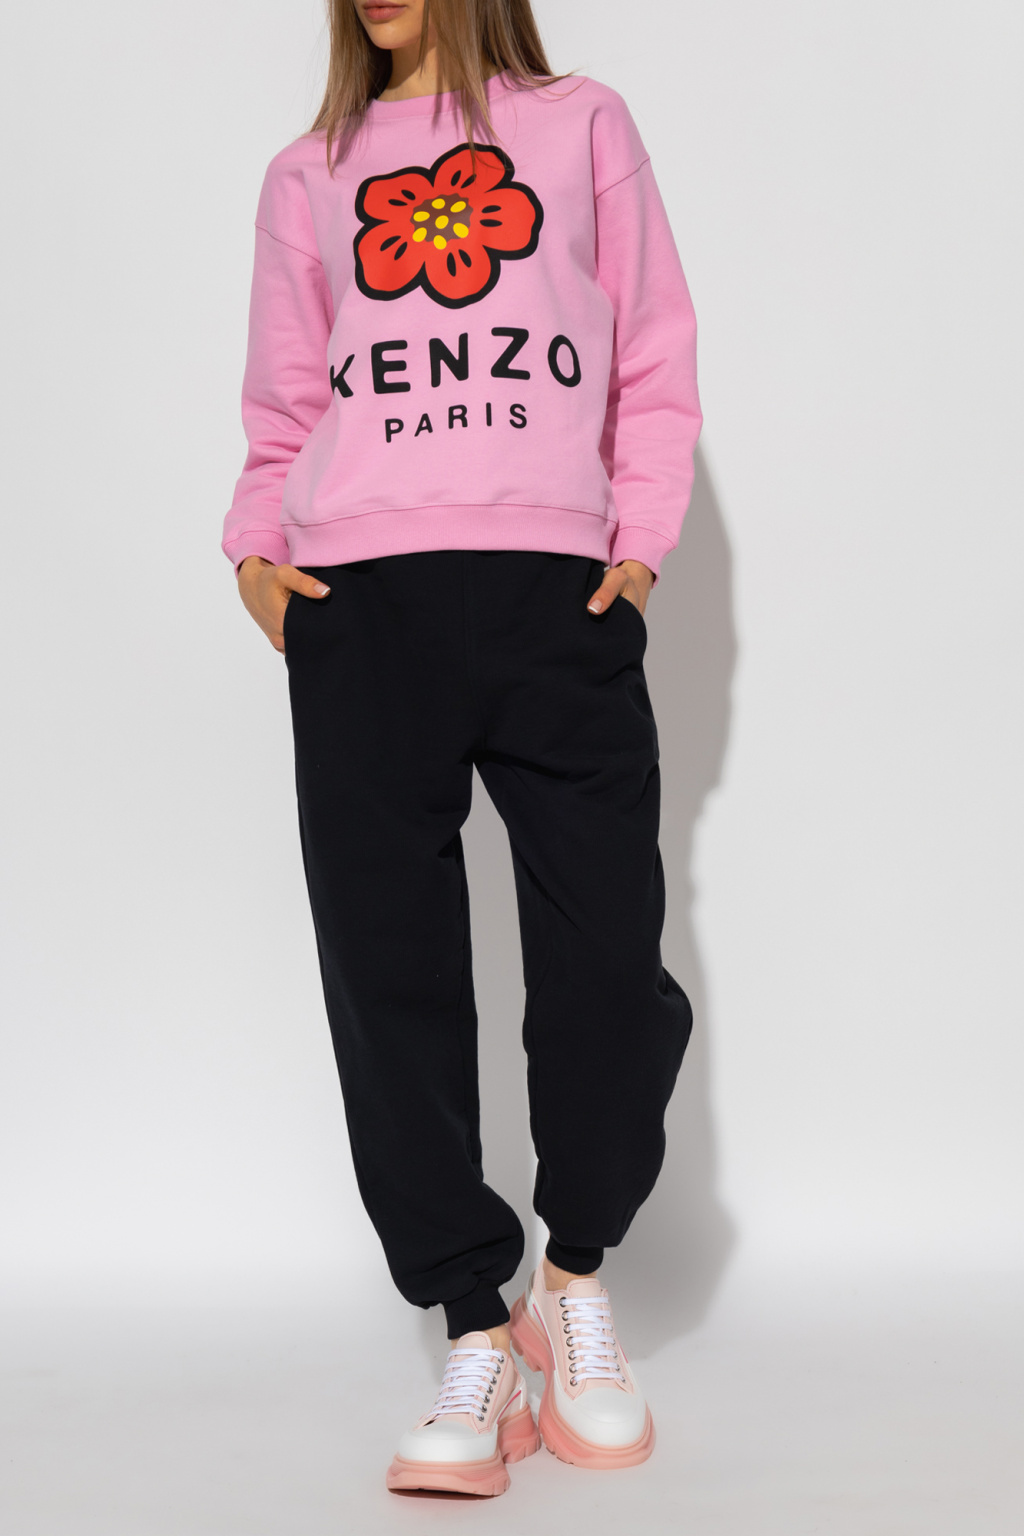 Kenzo clothing XXl Sweatpants